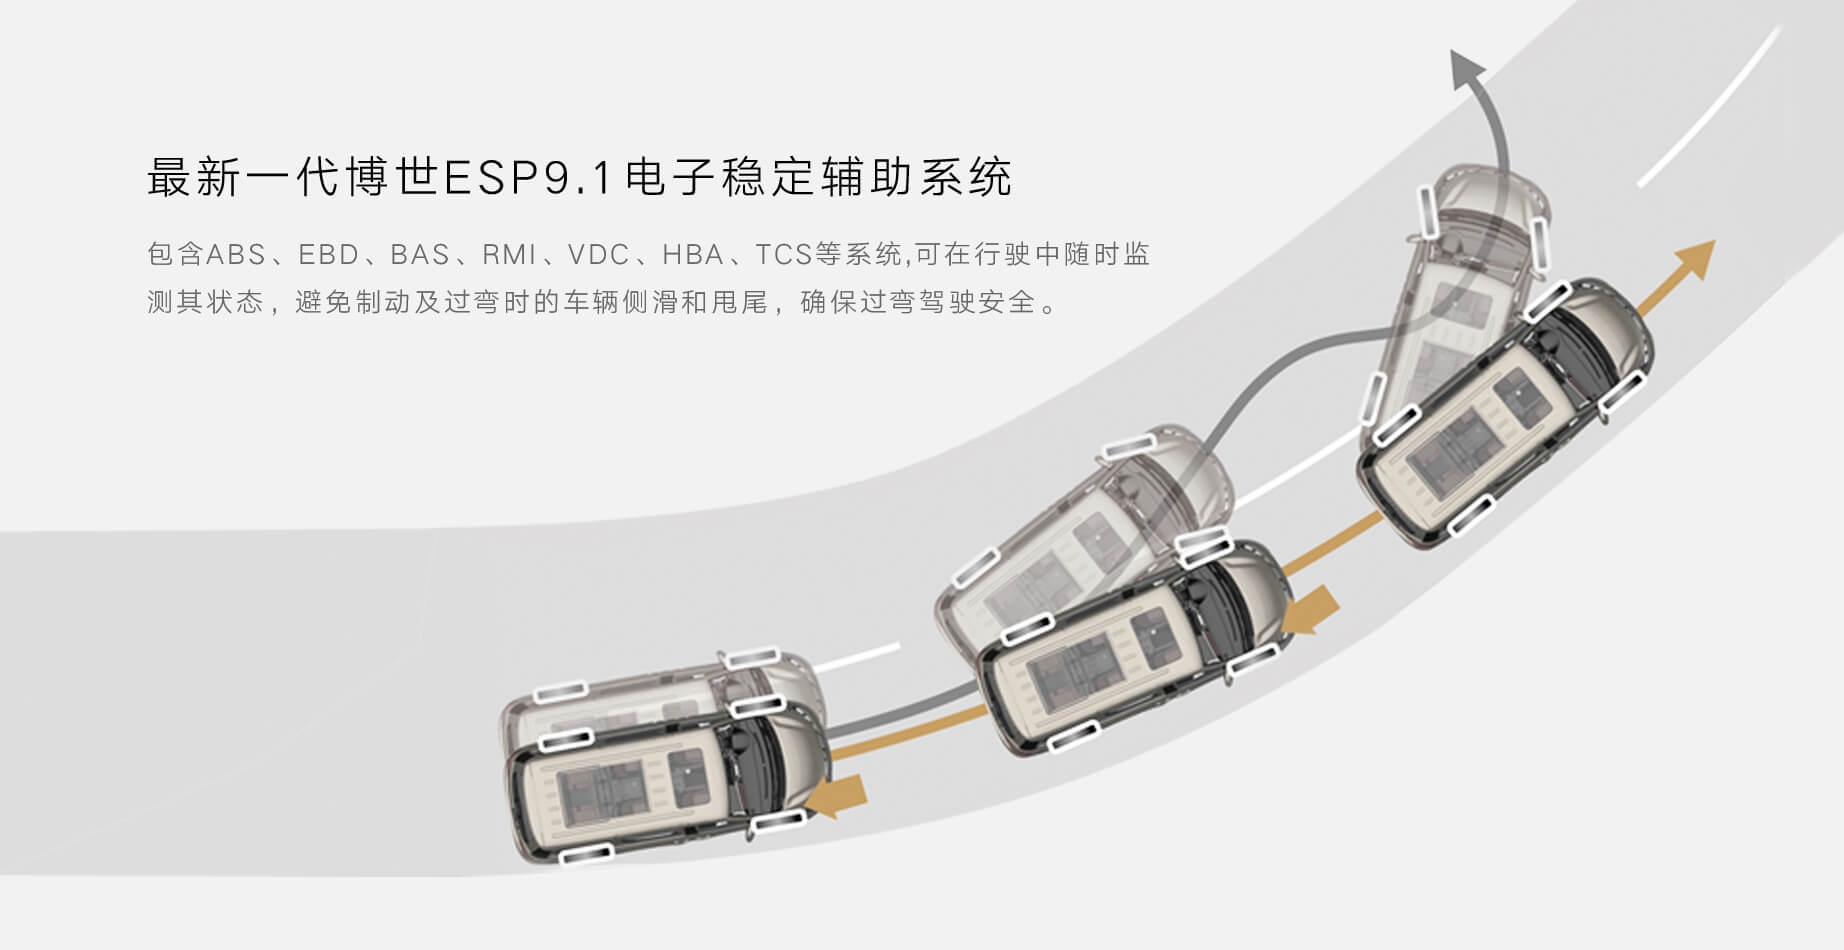 ESP9.1電子穩定輔助系統